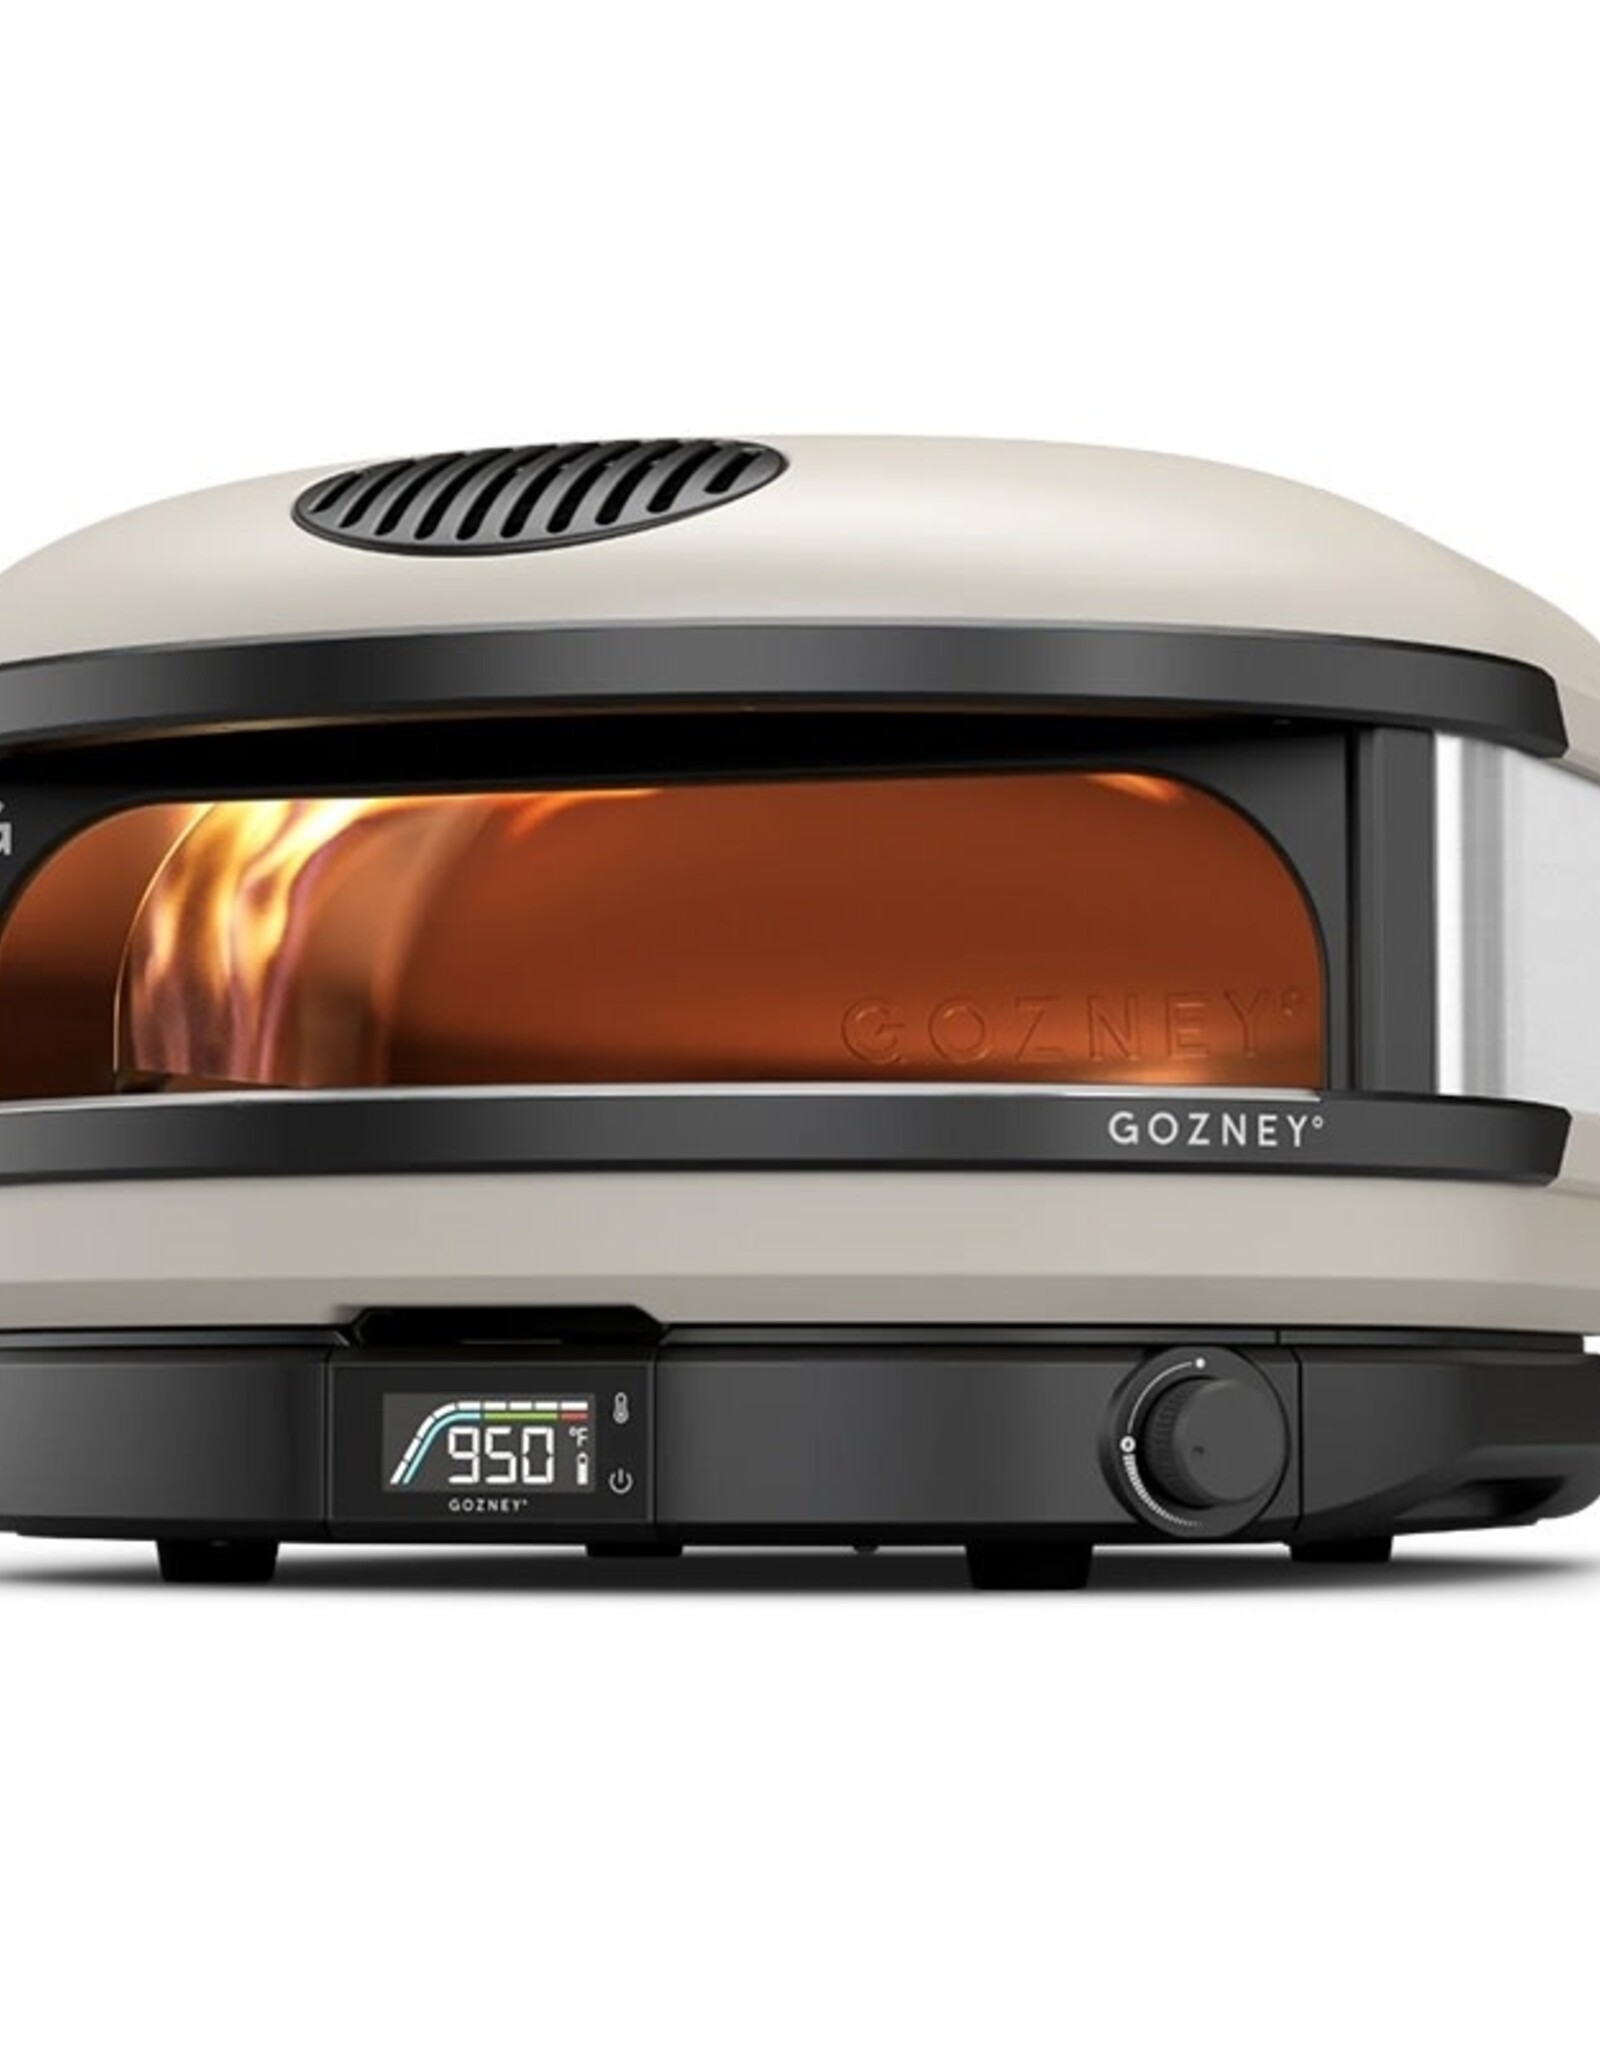 Gozney Gozney Arc XL Propane Outdoor Pizza Oven - Bone White - GAPBNUS1624